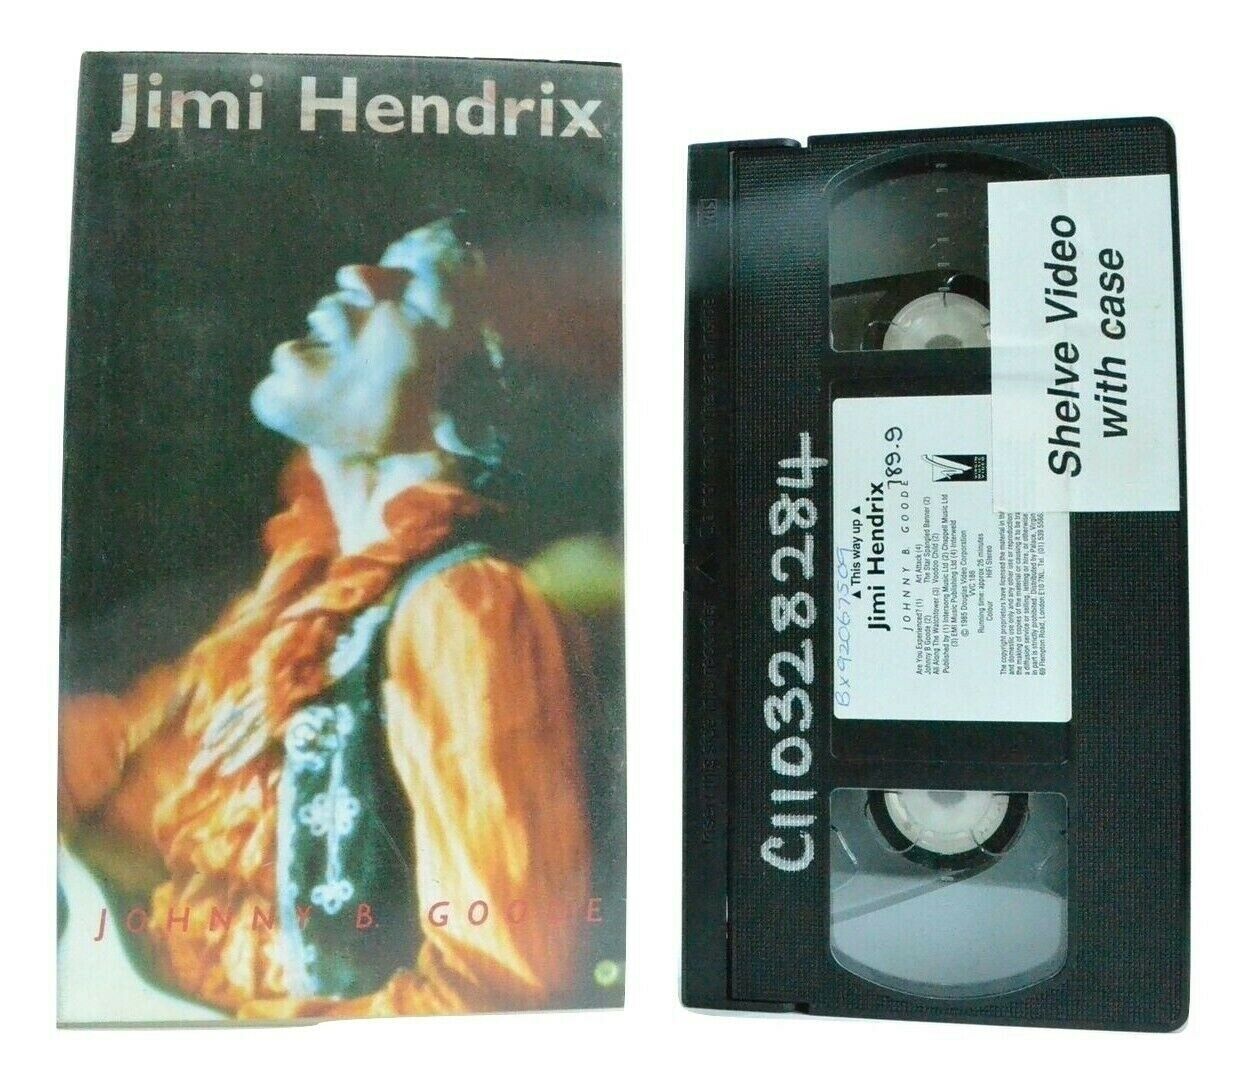 Jimi Hendrix: Johnny B.Goode - Live Performances - Rock And Roll - Music - VHS-